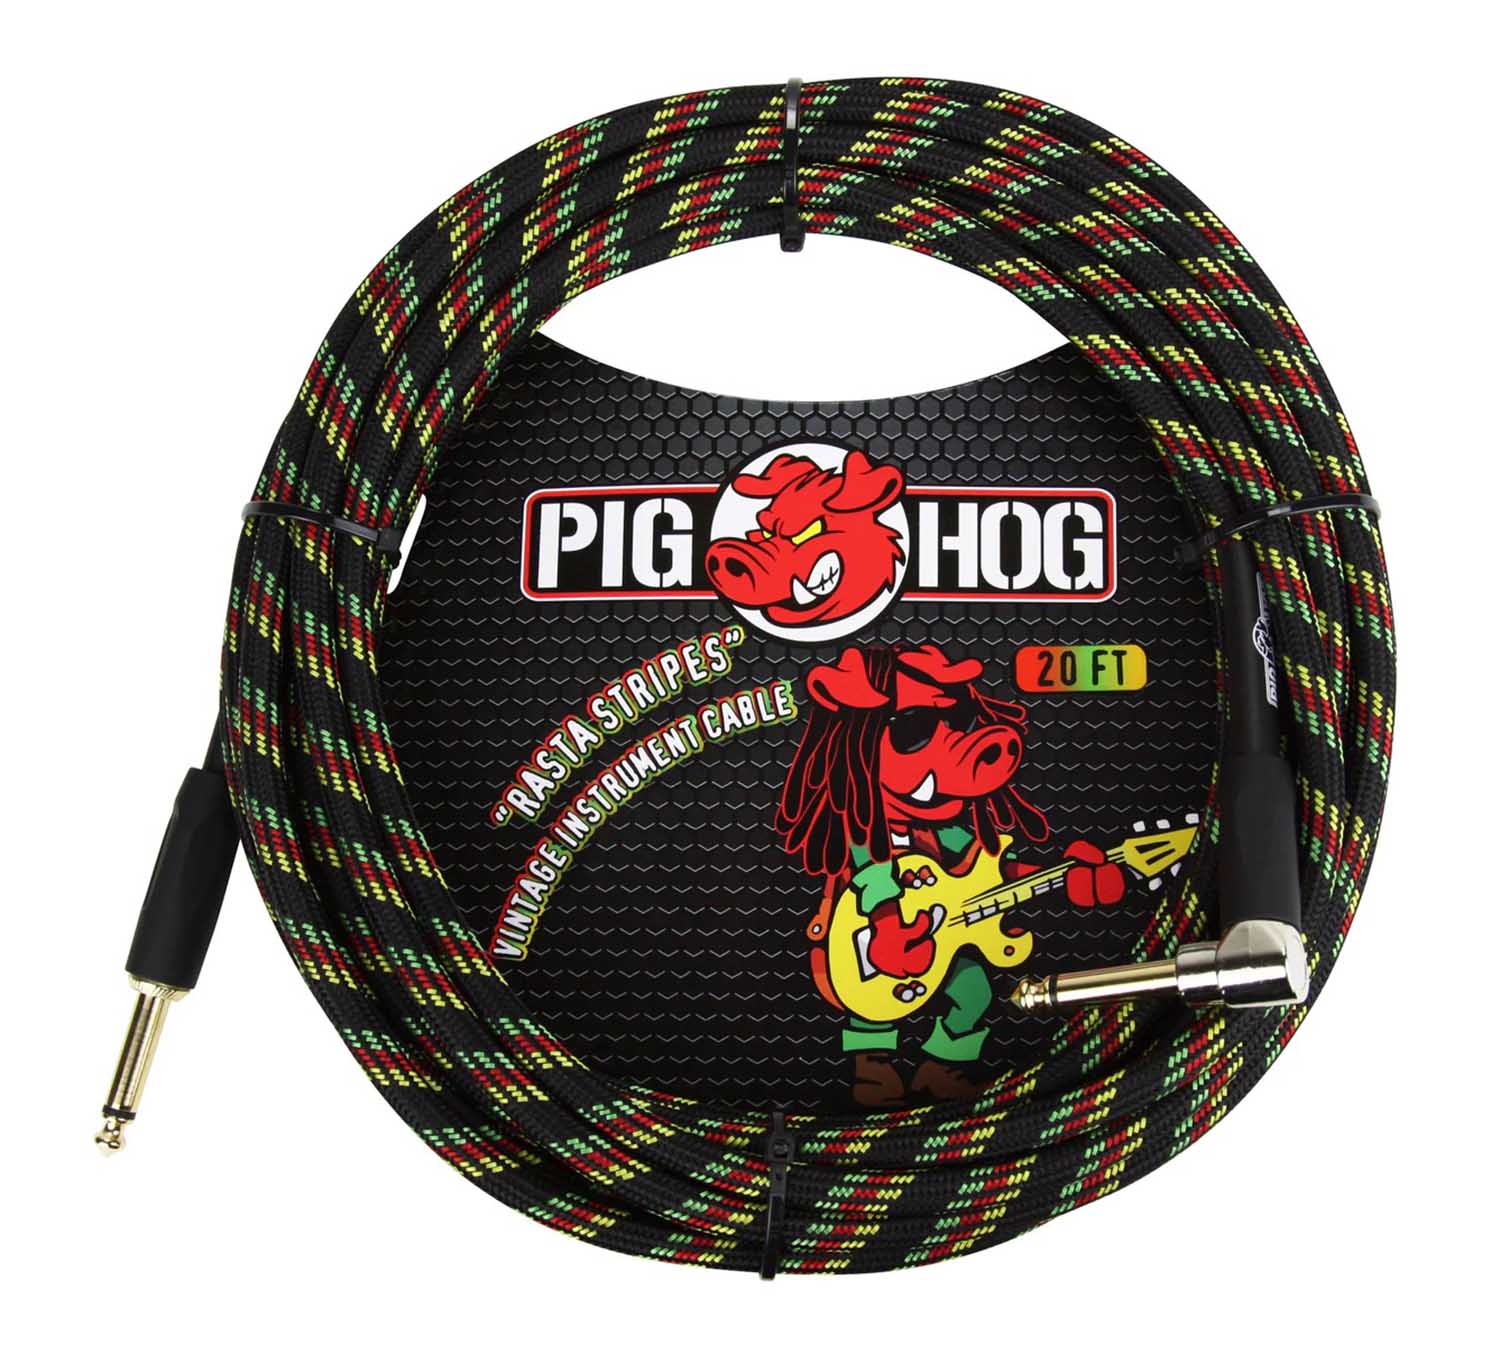 Pig Hog PCH20RAR, Rasta Stripes Instrument Cable with Angled End - 20 Foot - Hollywood DJ